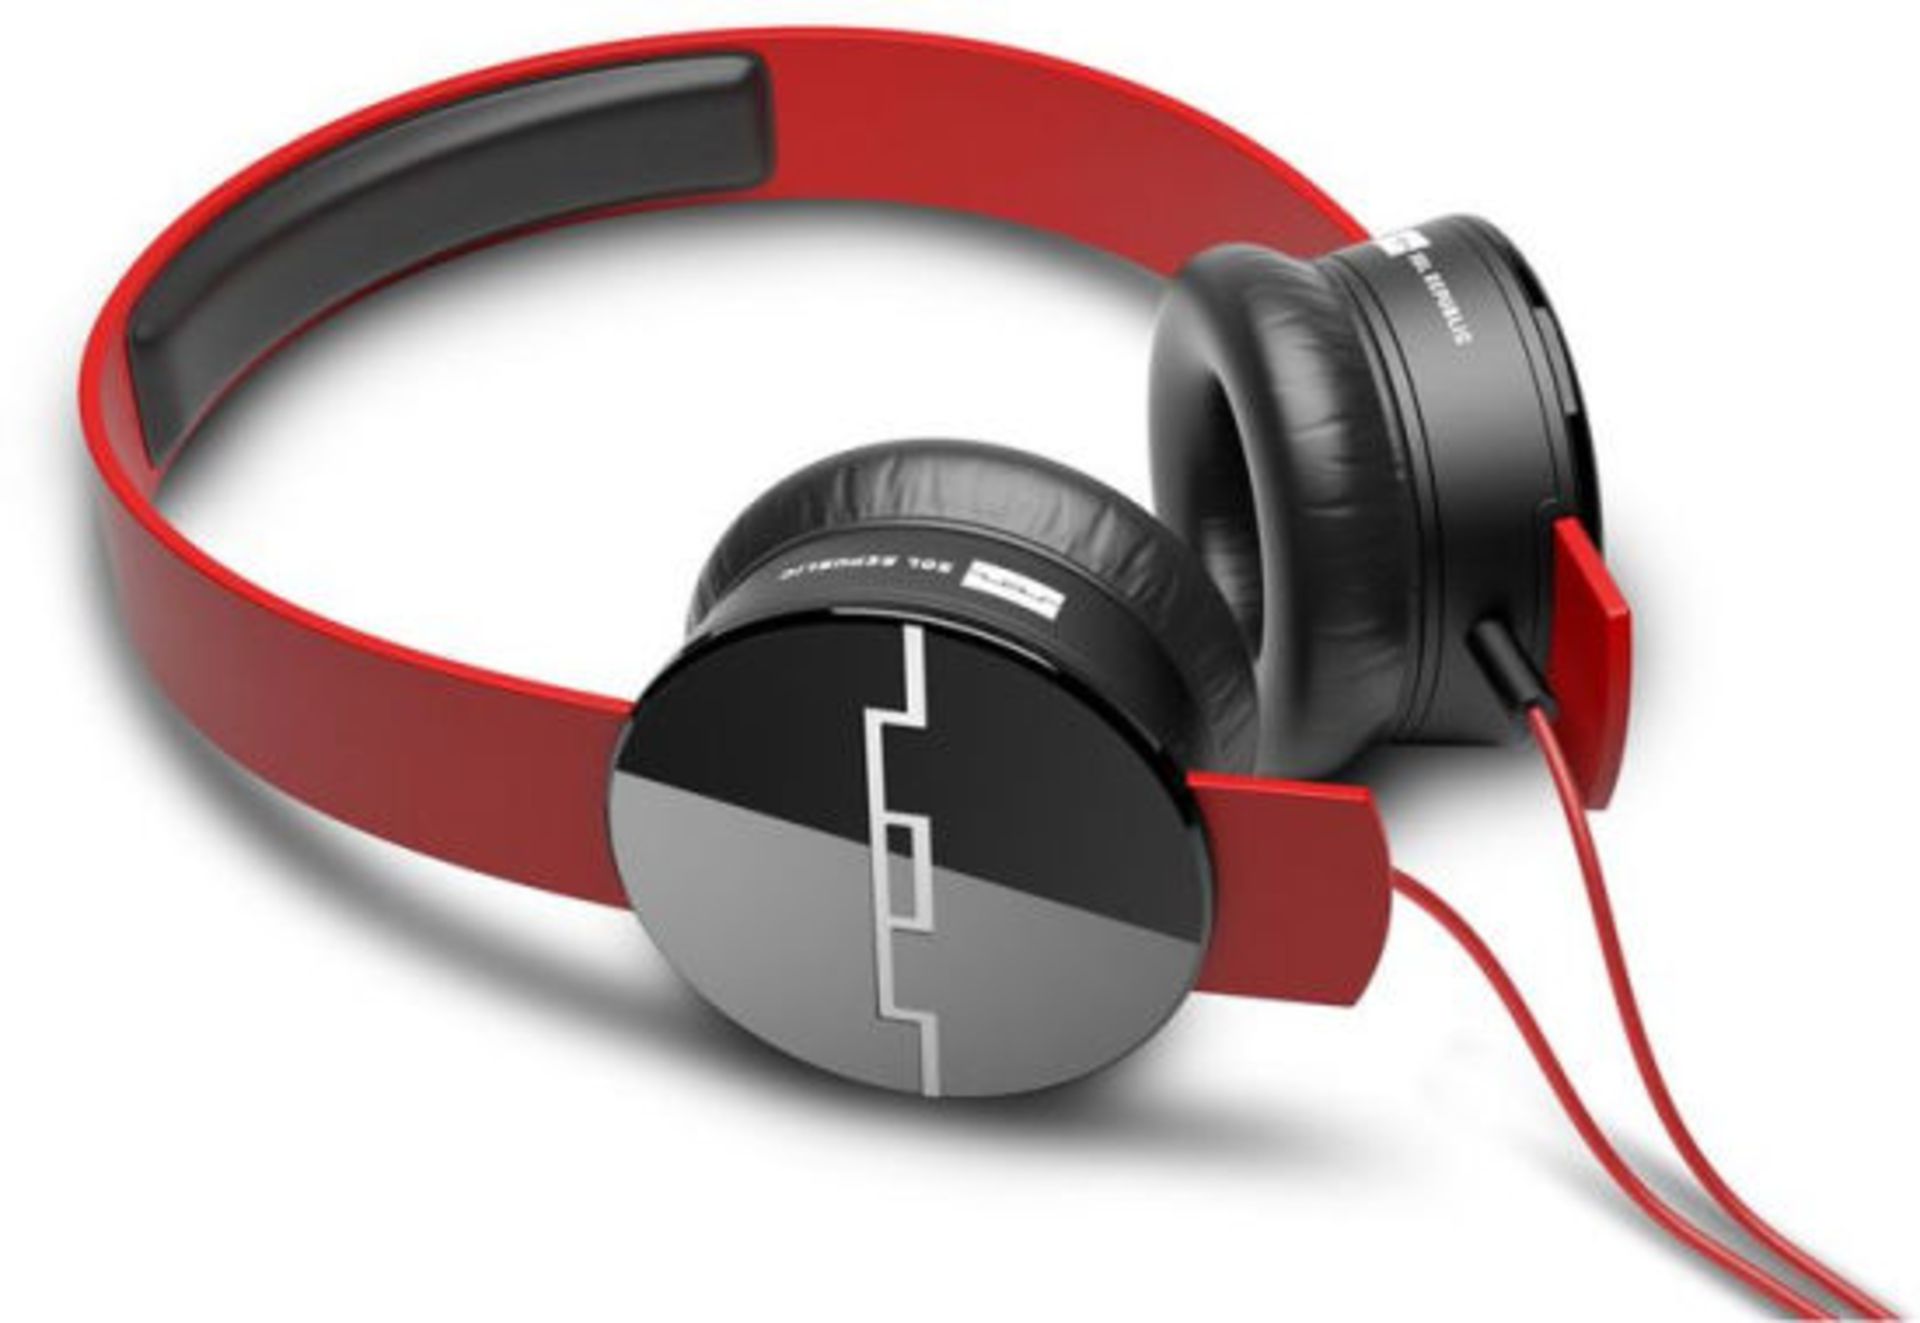 V Brand New Sol Republic Tracks V8 Red - With Sonic Ear Cushions - Music & Phone Control Virtually